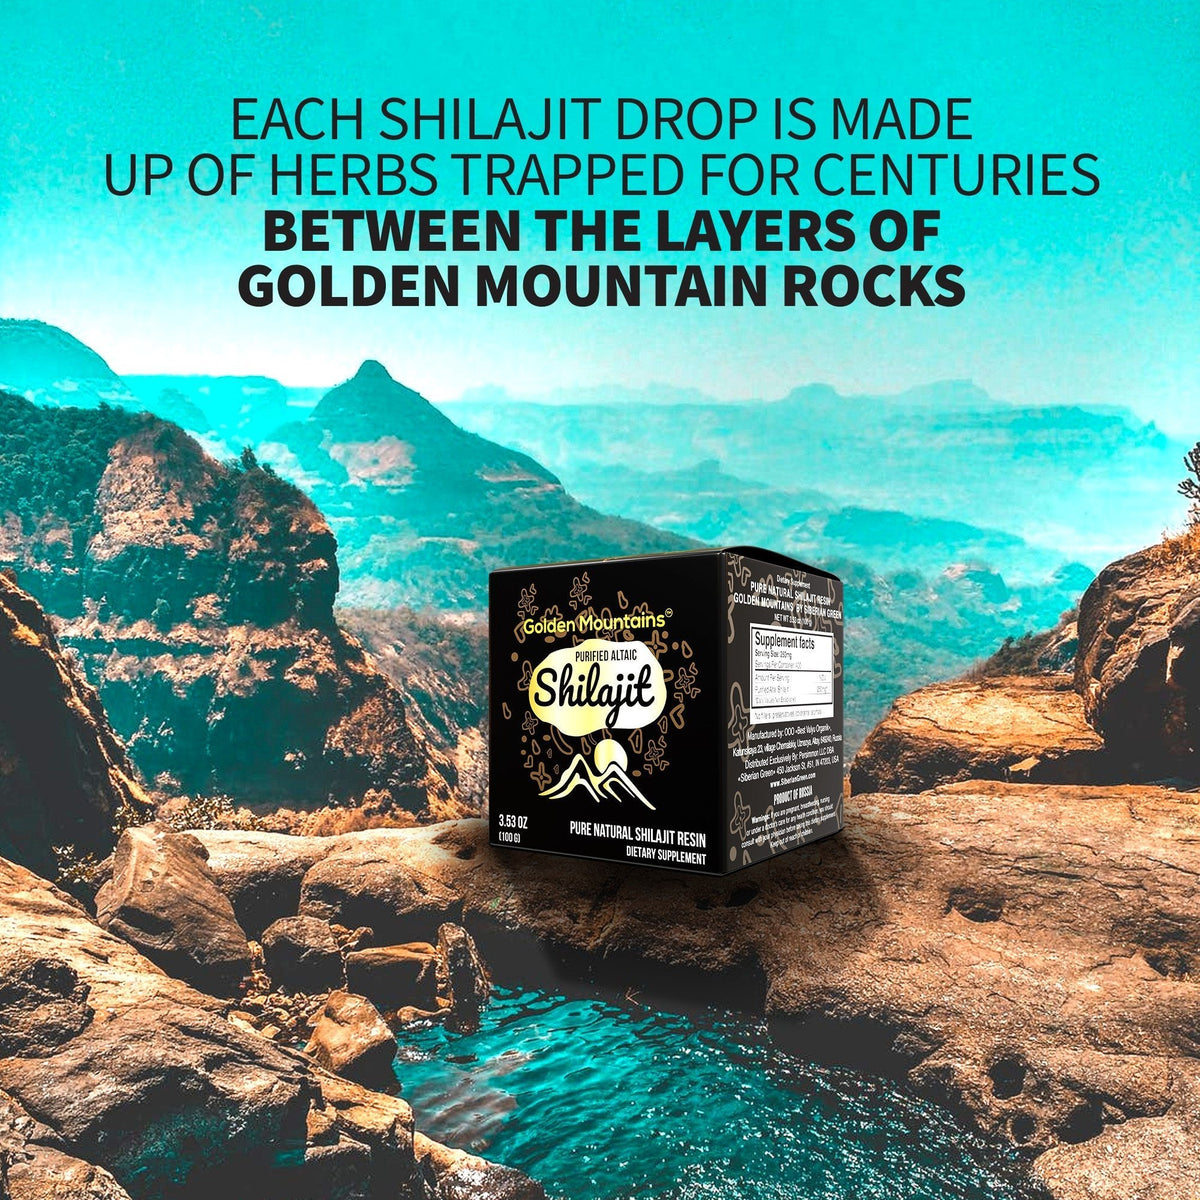 Golden Mountains Shilajit Resin Premium Pure Authentic Siberian Altai 100g - Measuring Spoon – Exclusive Quality Certificate